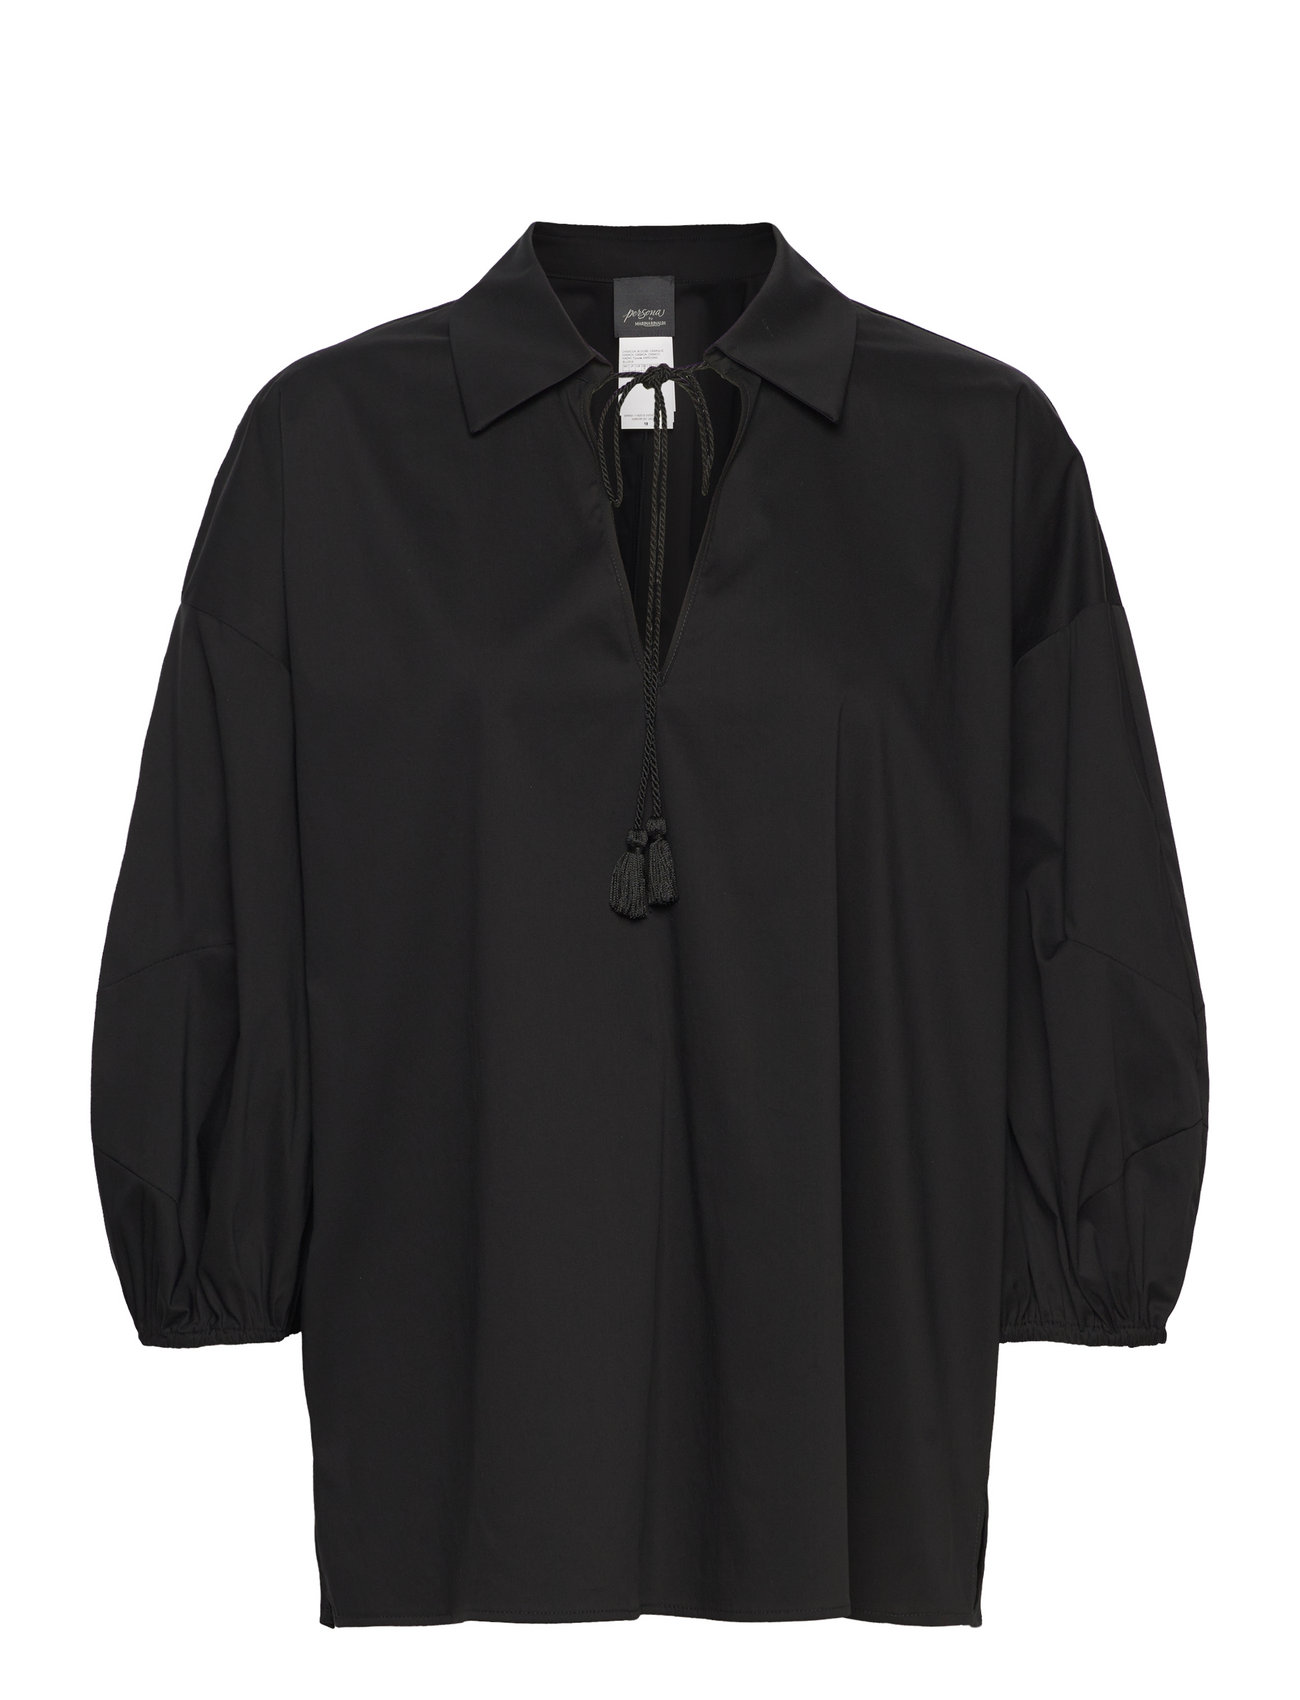 Fine Tops Blouses Short-sleeved Black Persona By Marina Rinaldi